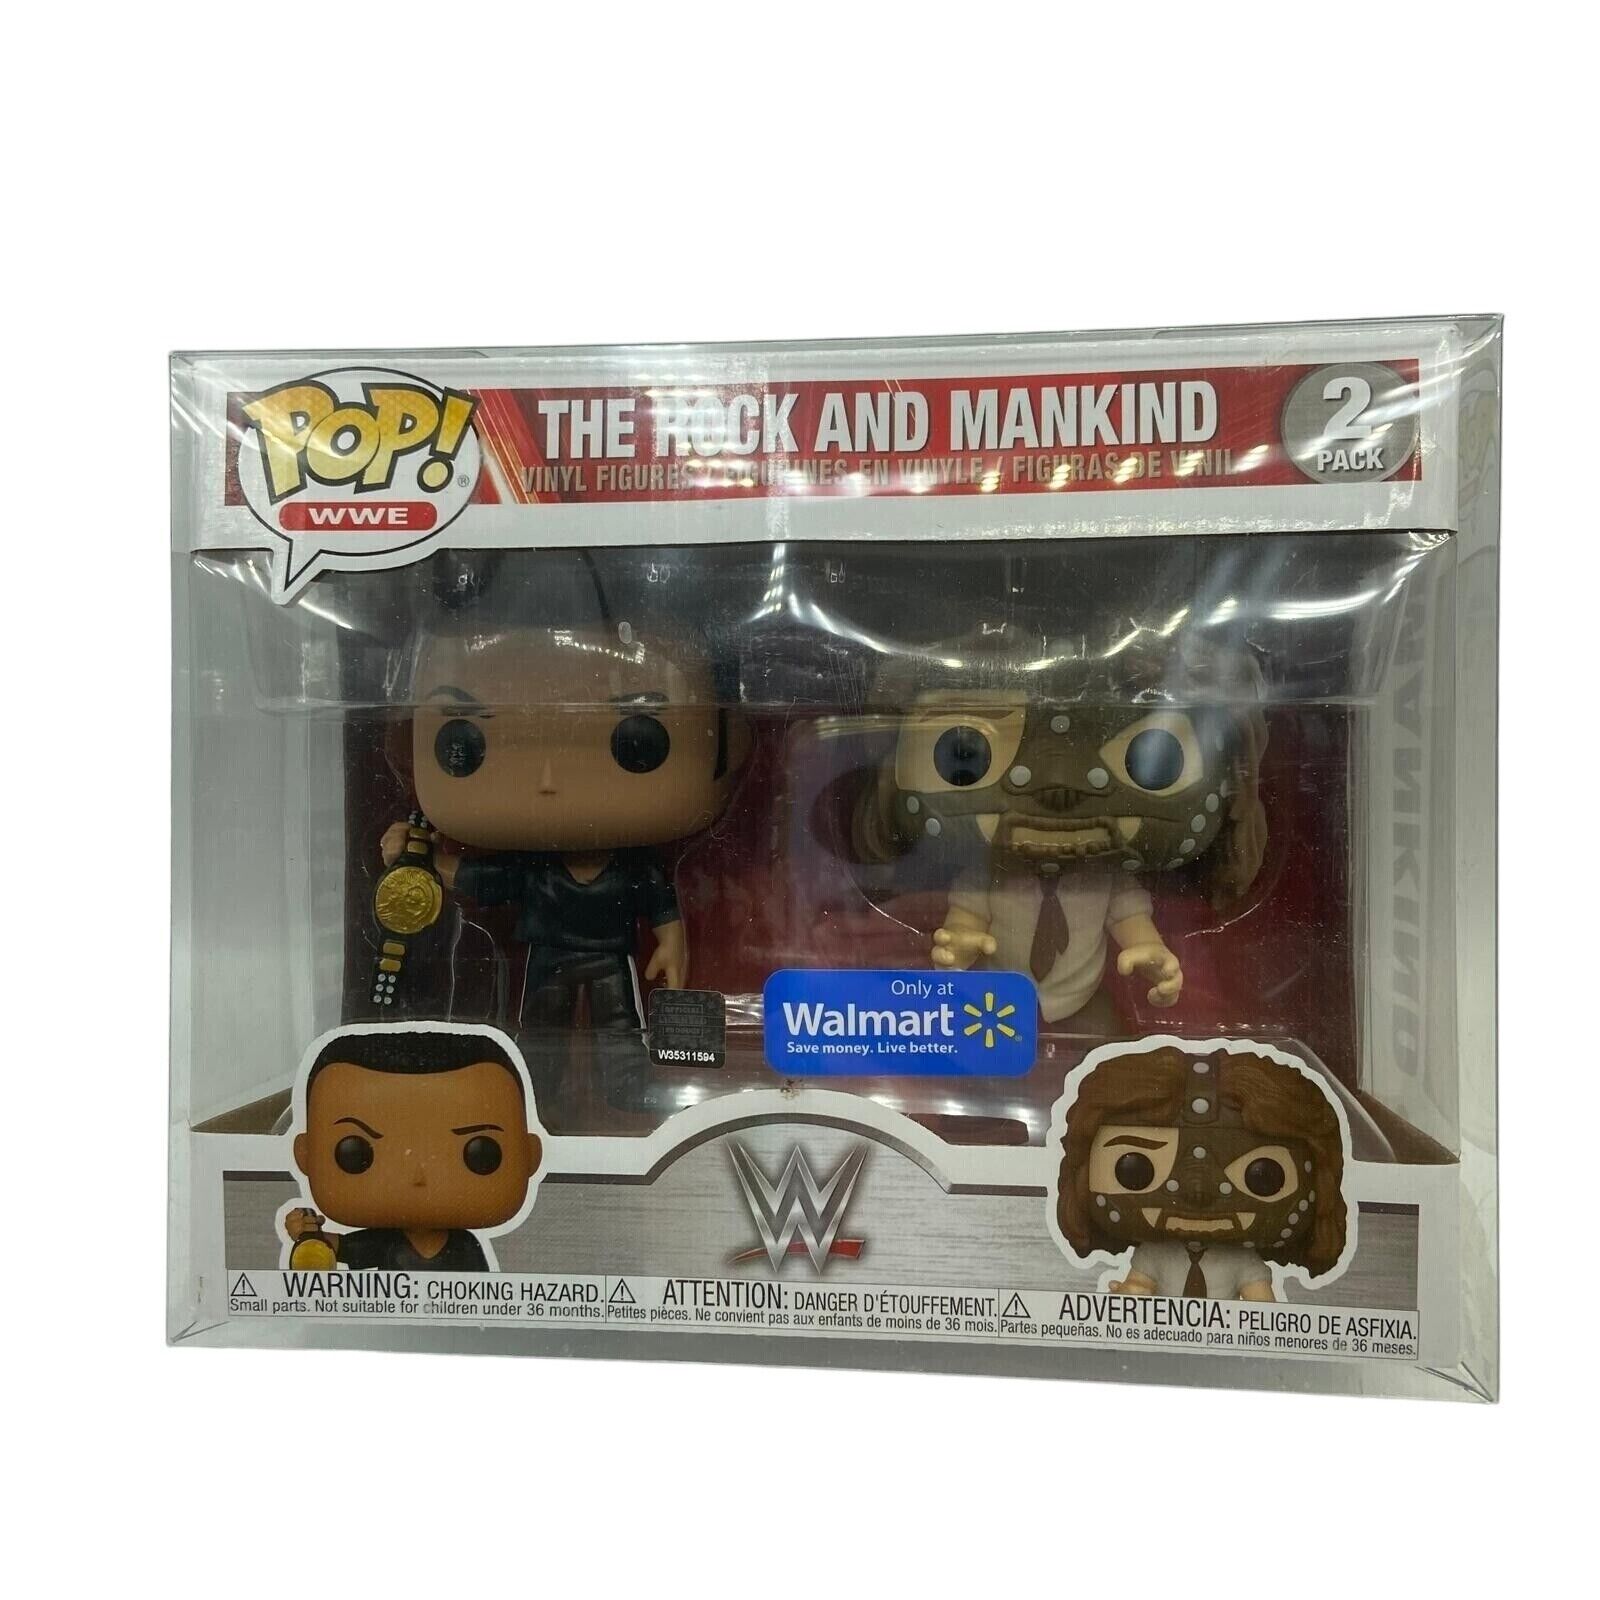 Funko Pop The Rock and Mankind Walmart Exclusive Walmart 2 Pack.